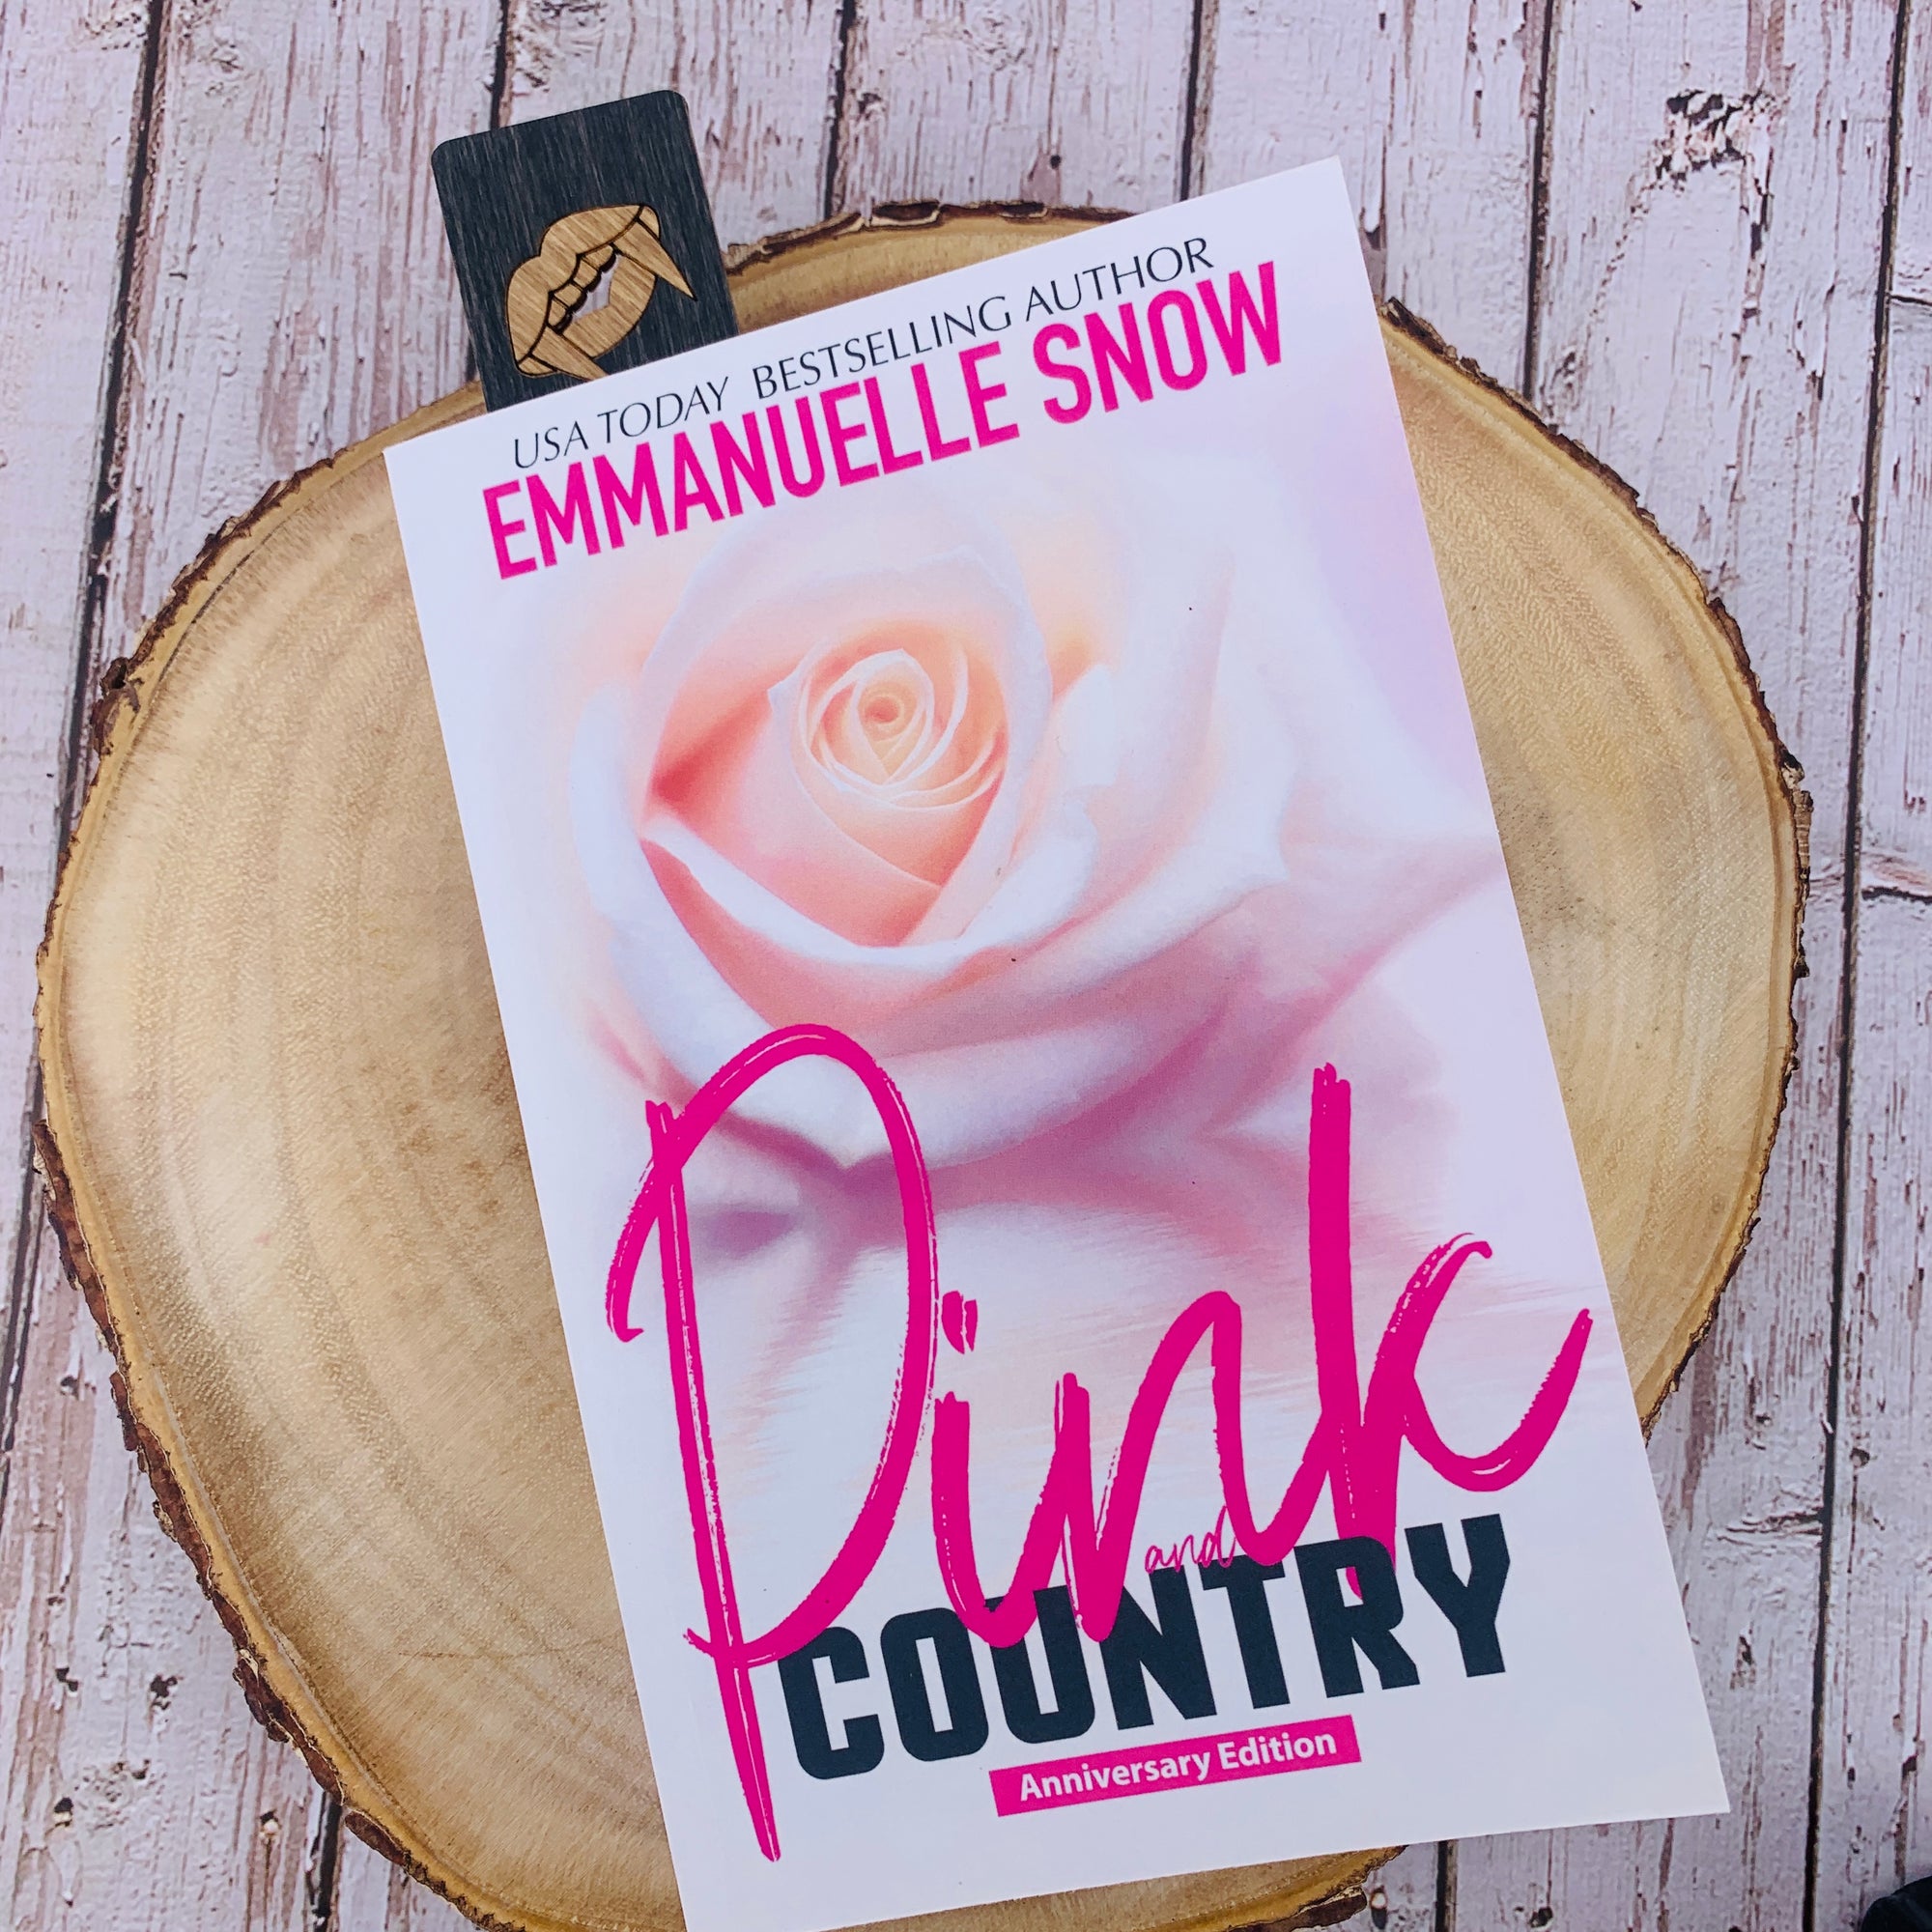 Vampire Dark wood Bookmark Pink and Country Emmanuelle Snow Like Laura Pavlov 